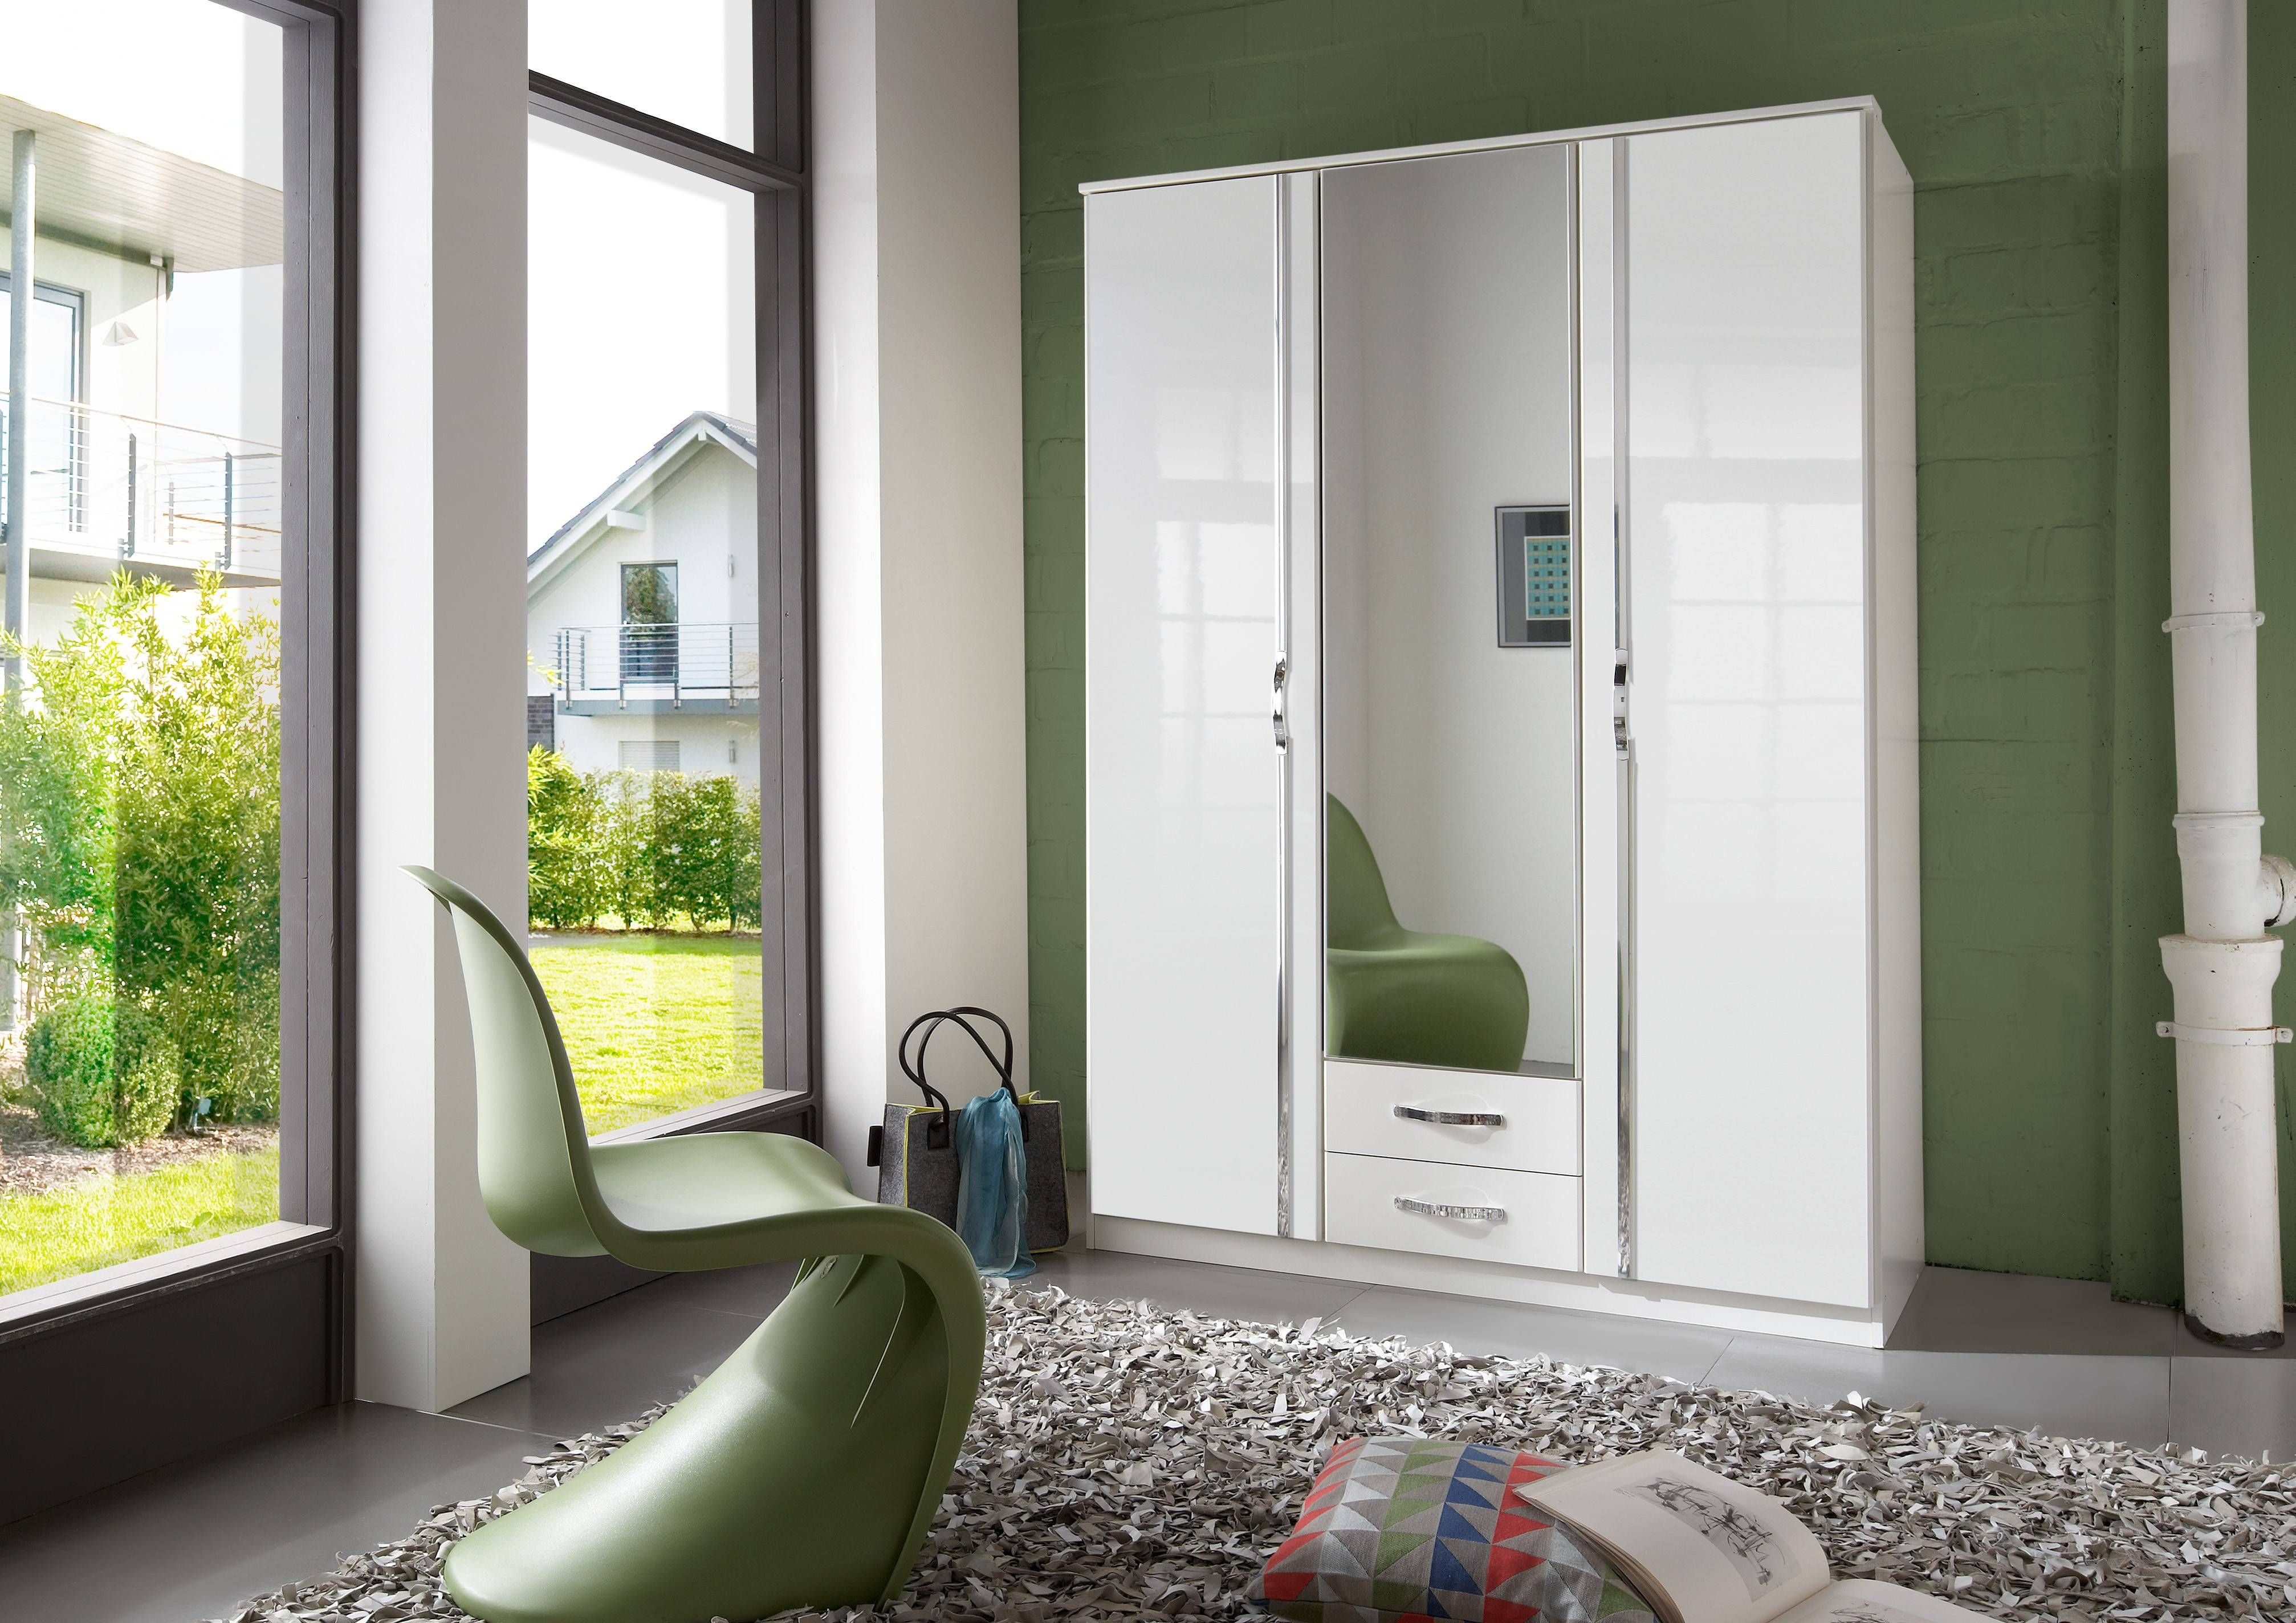 Slumberhaus 'trio' White Gloss, Chrome & Mirror 3 Door 2 Drawer Inside 4 Door Wardrobes With Mirror And Drawers (View 15 of 15)